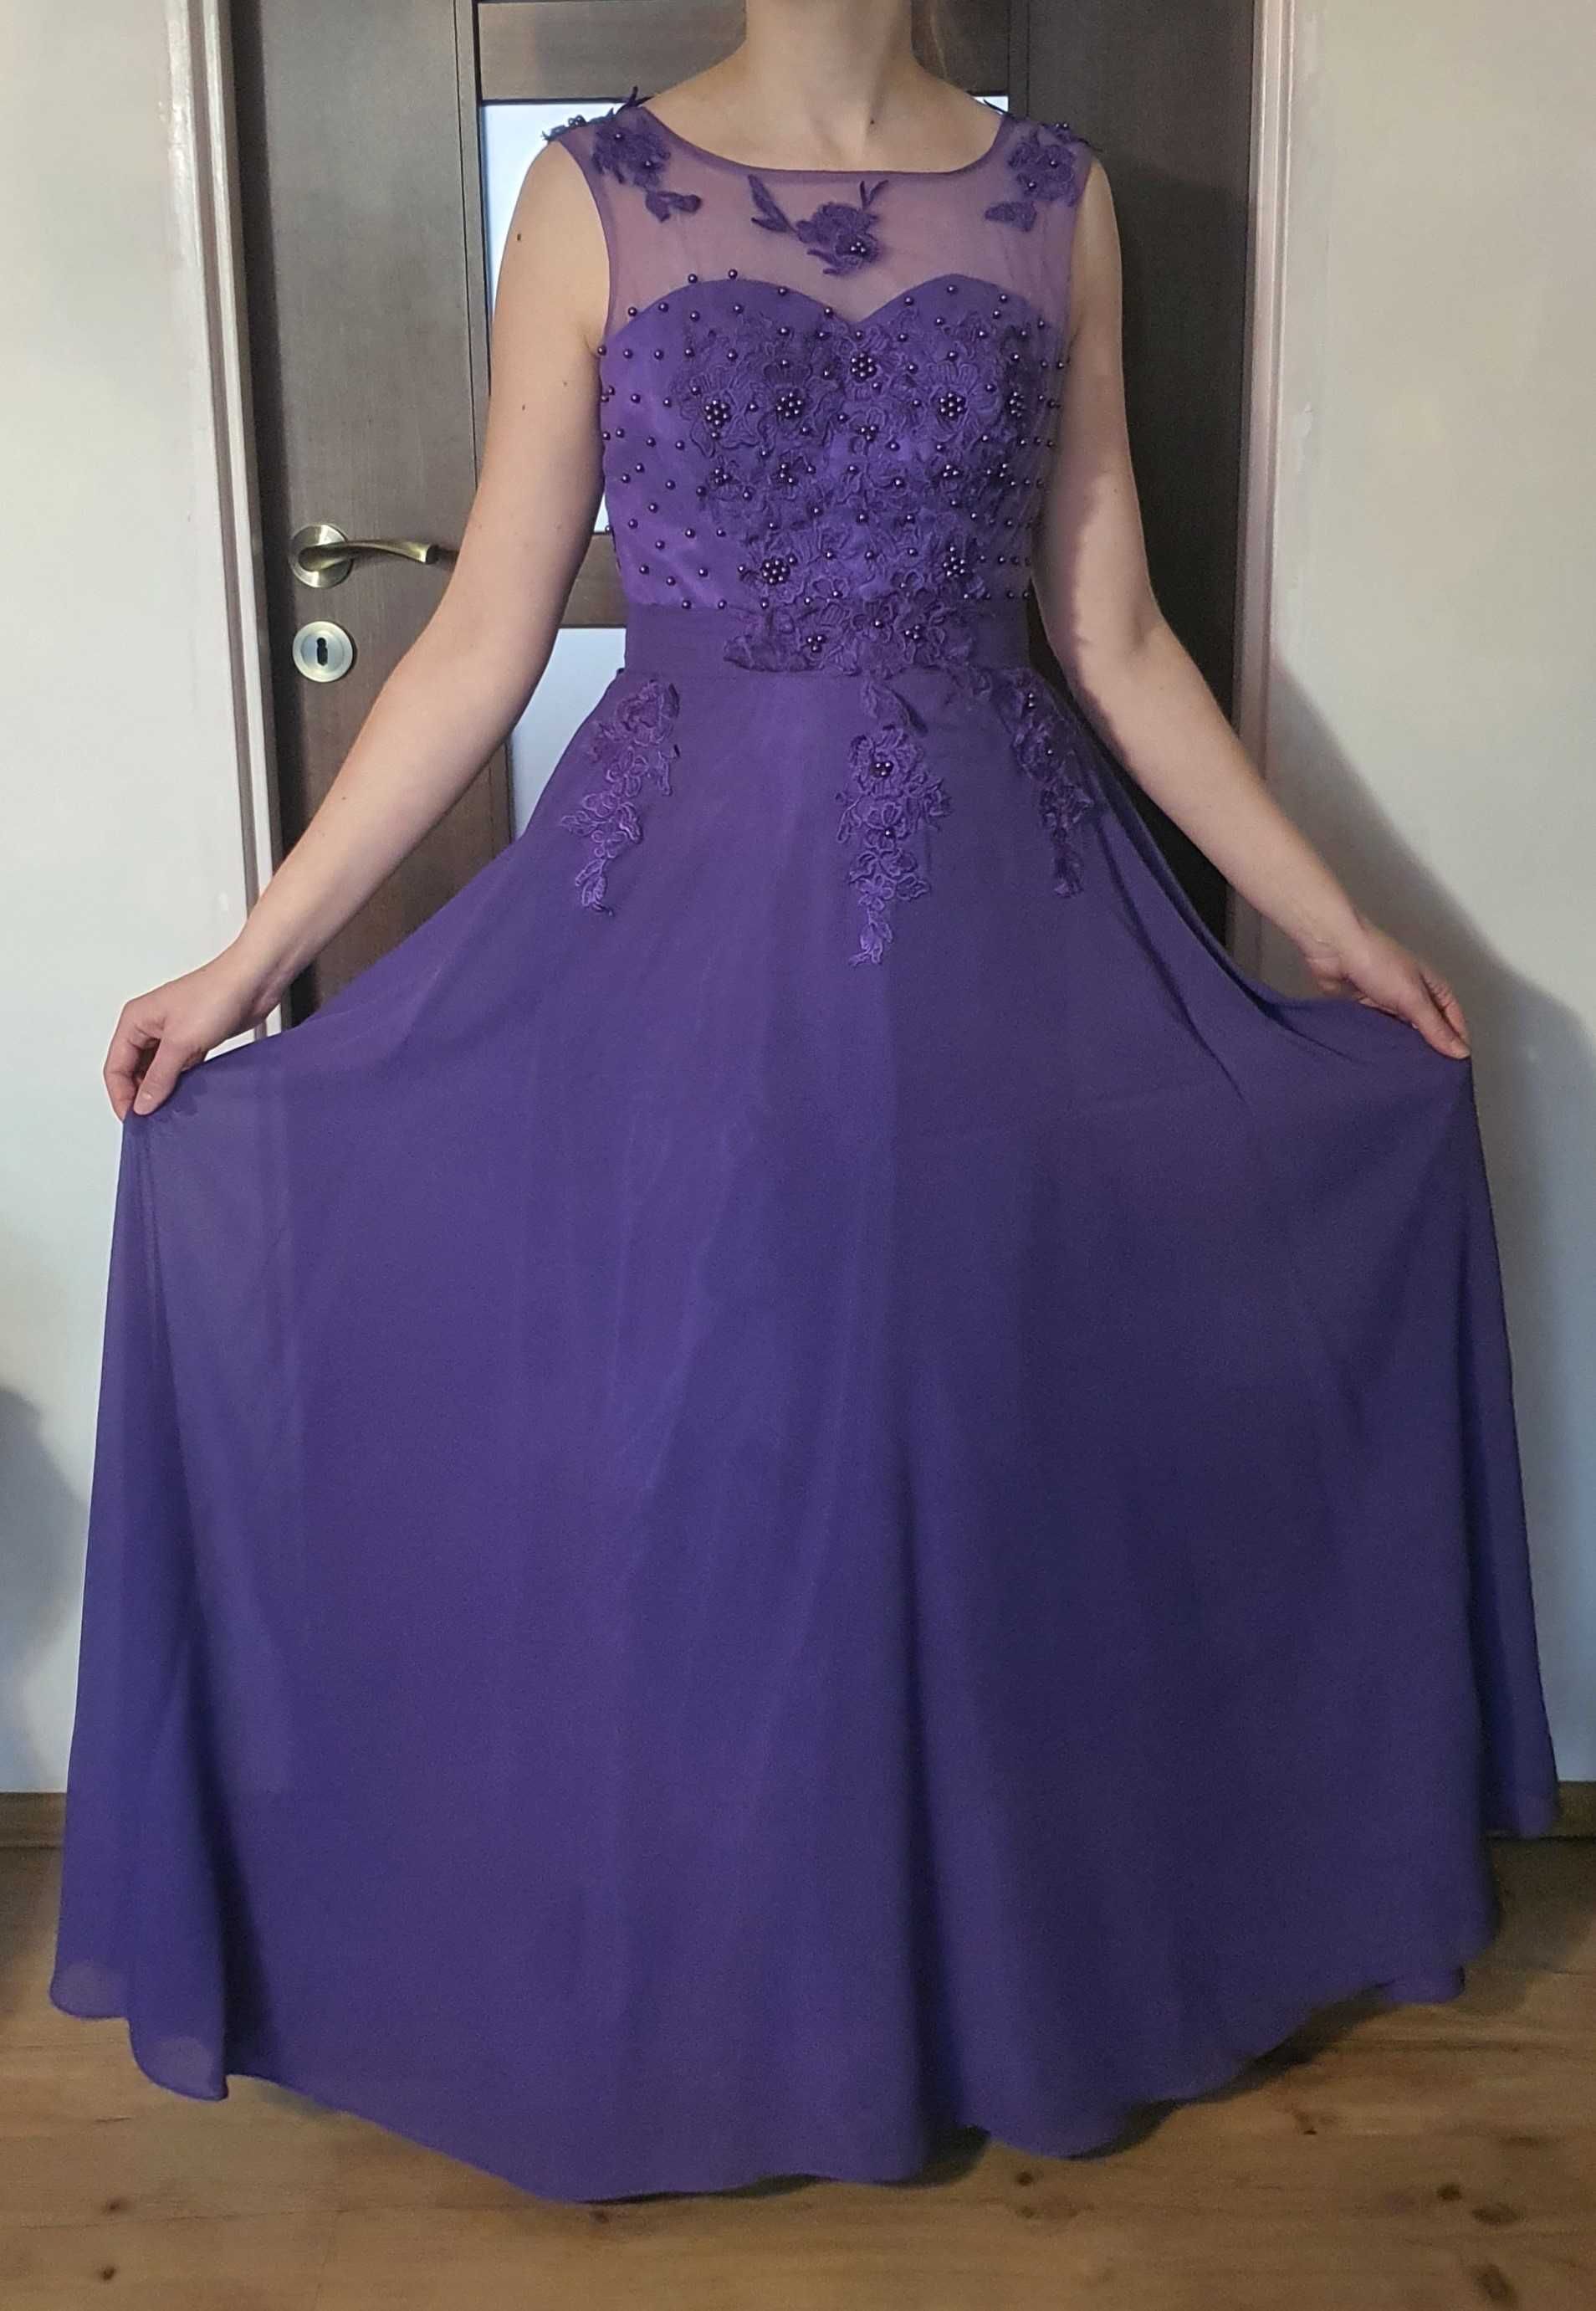 Fioletowa długa suknia na wesele lub bal - kształt litery A